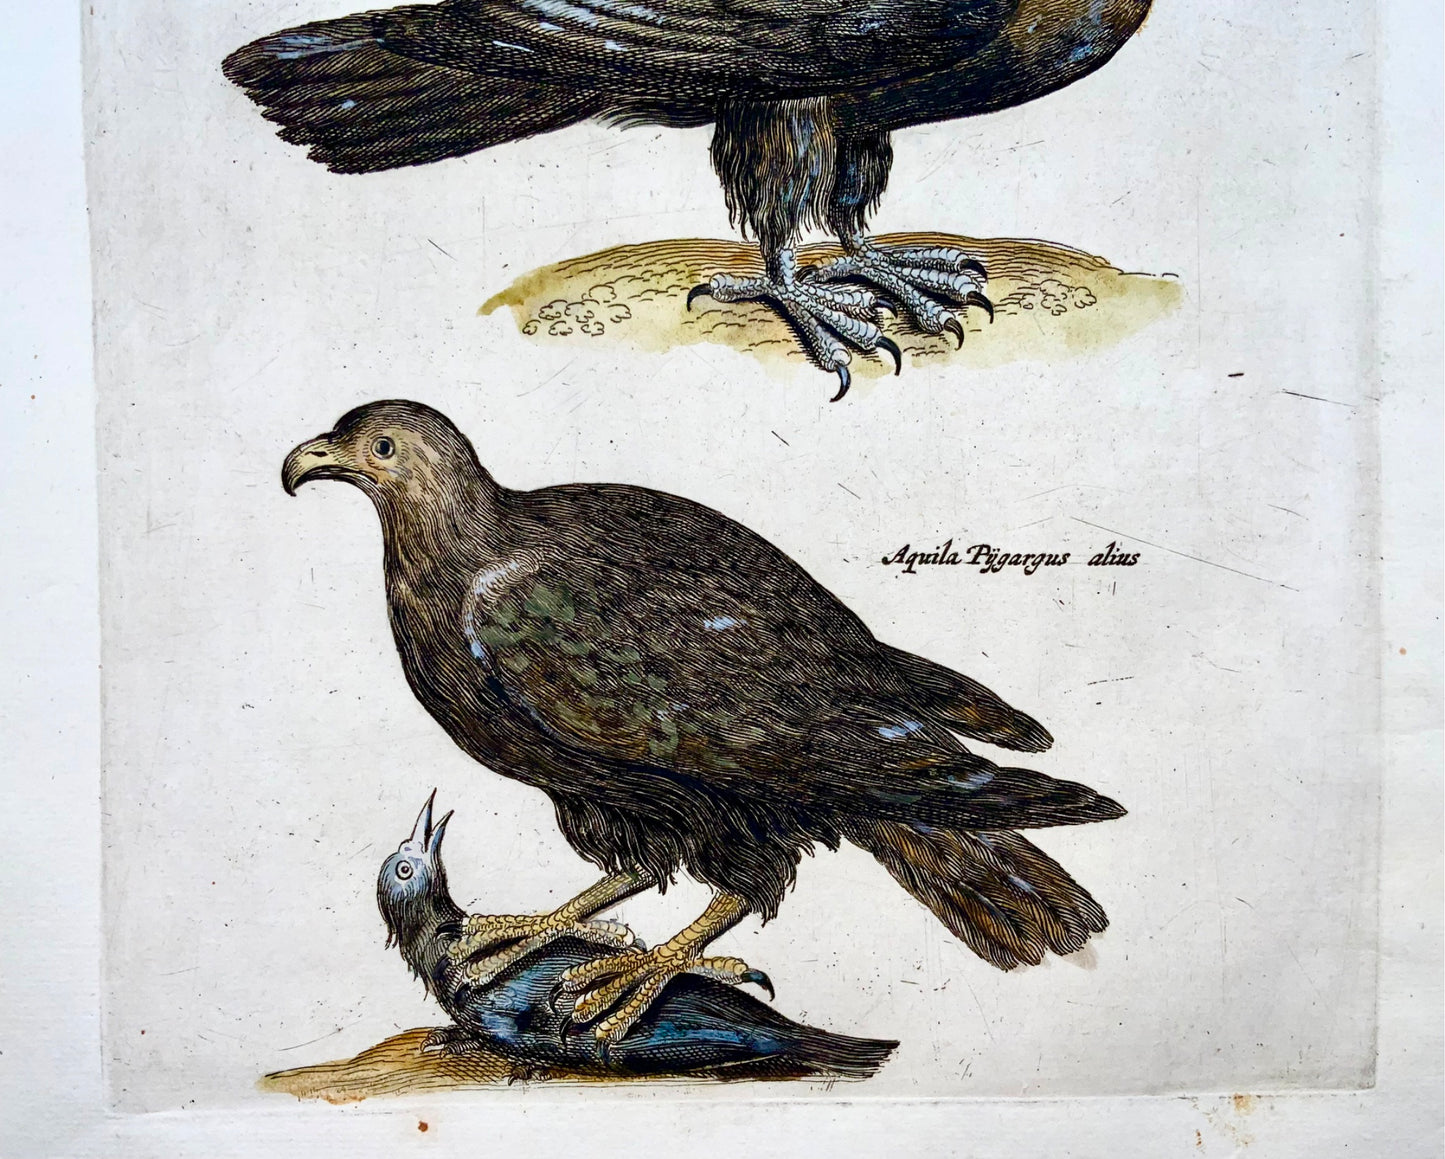 1657 EAGLES, Birds of Prey - Matt. MERIAN Folio hand coloured copper engraving